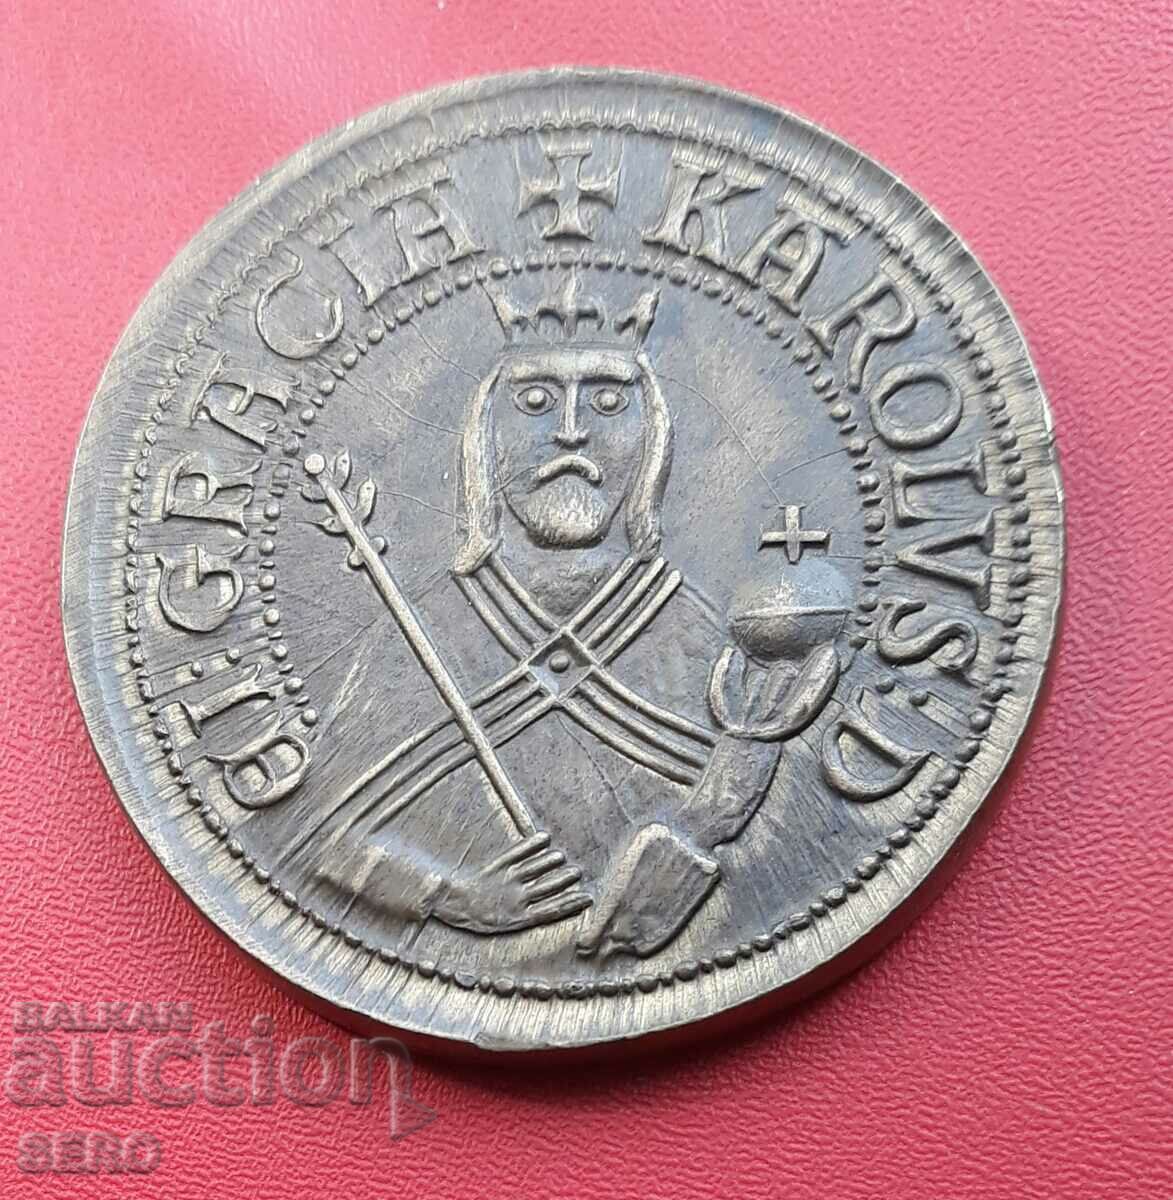 Cehia-medalie/replică gulden de aur/-Carol al IV-lea 1316-1378